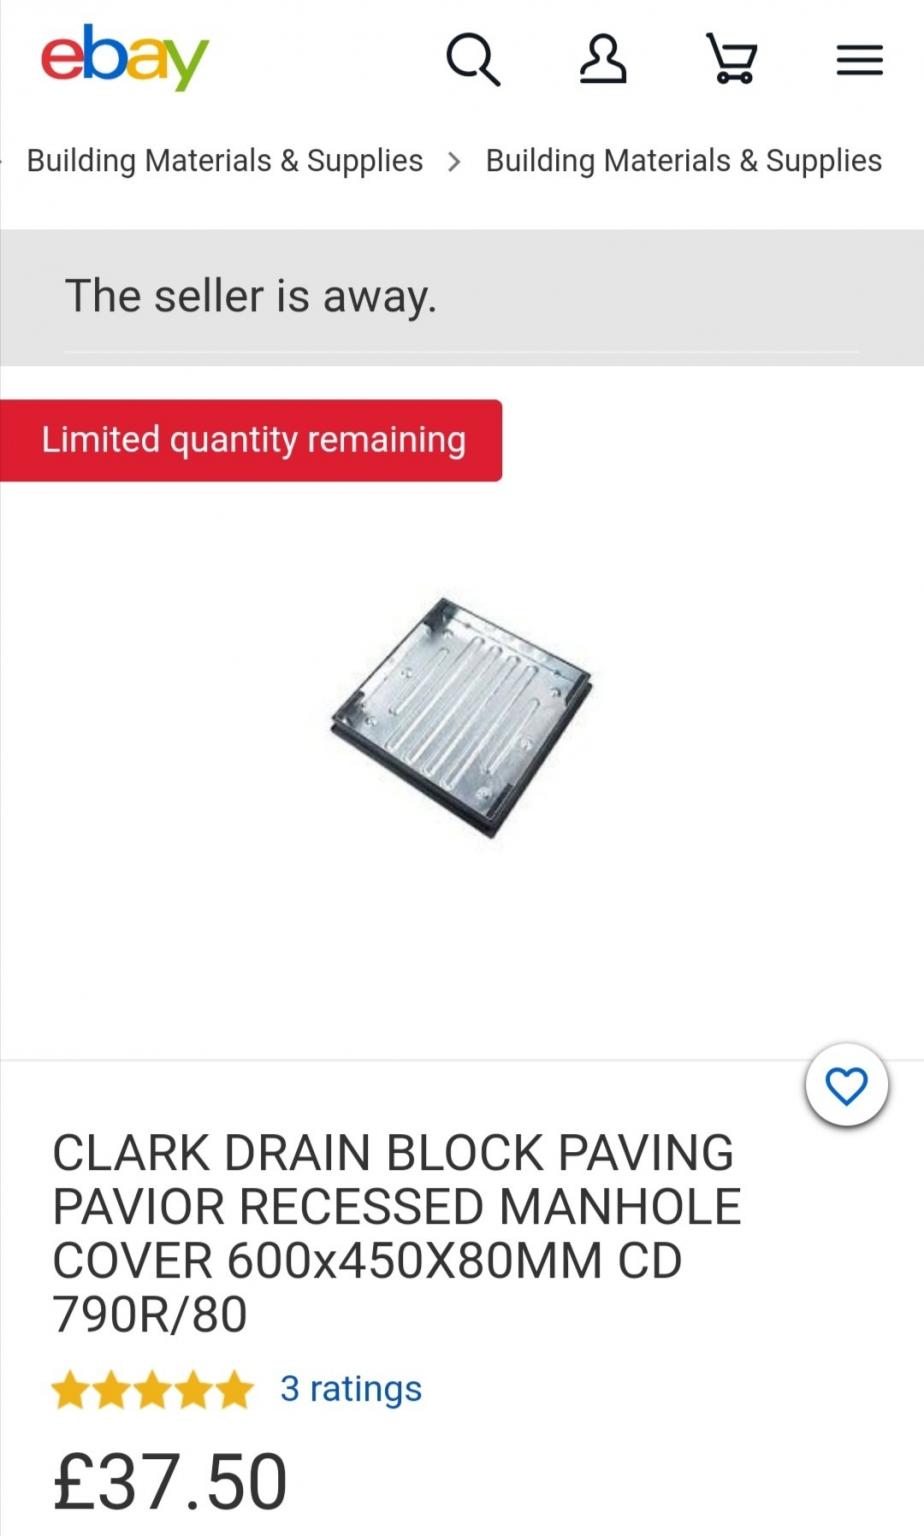 CLARK DRAIN BLOCK PAVING PAVIOR RECESSED MANHOLE COVER 600x450X80MM CD 790R/80 